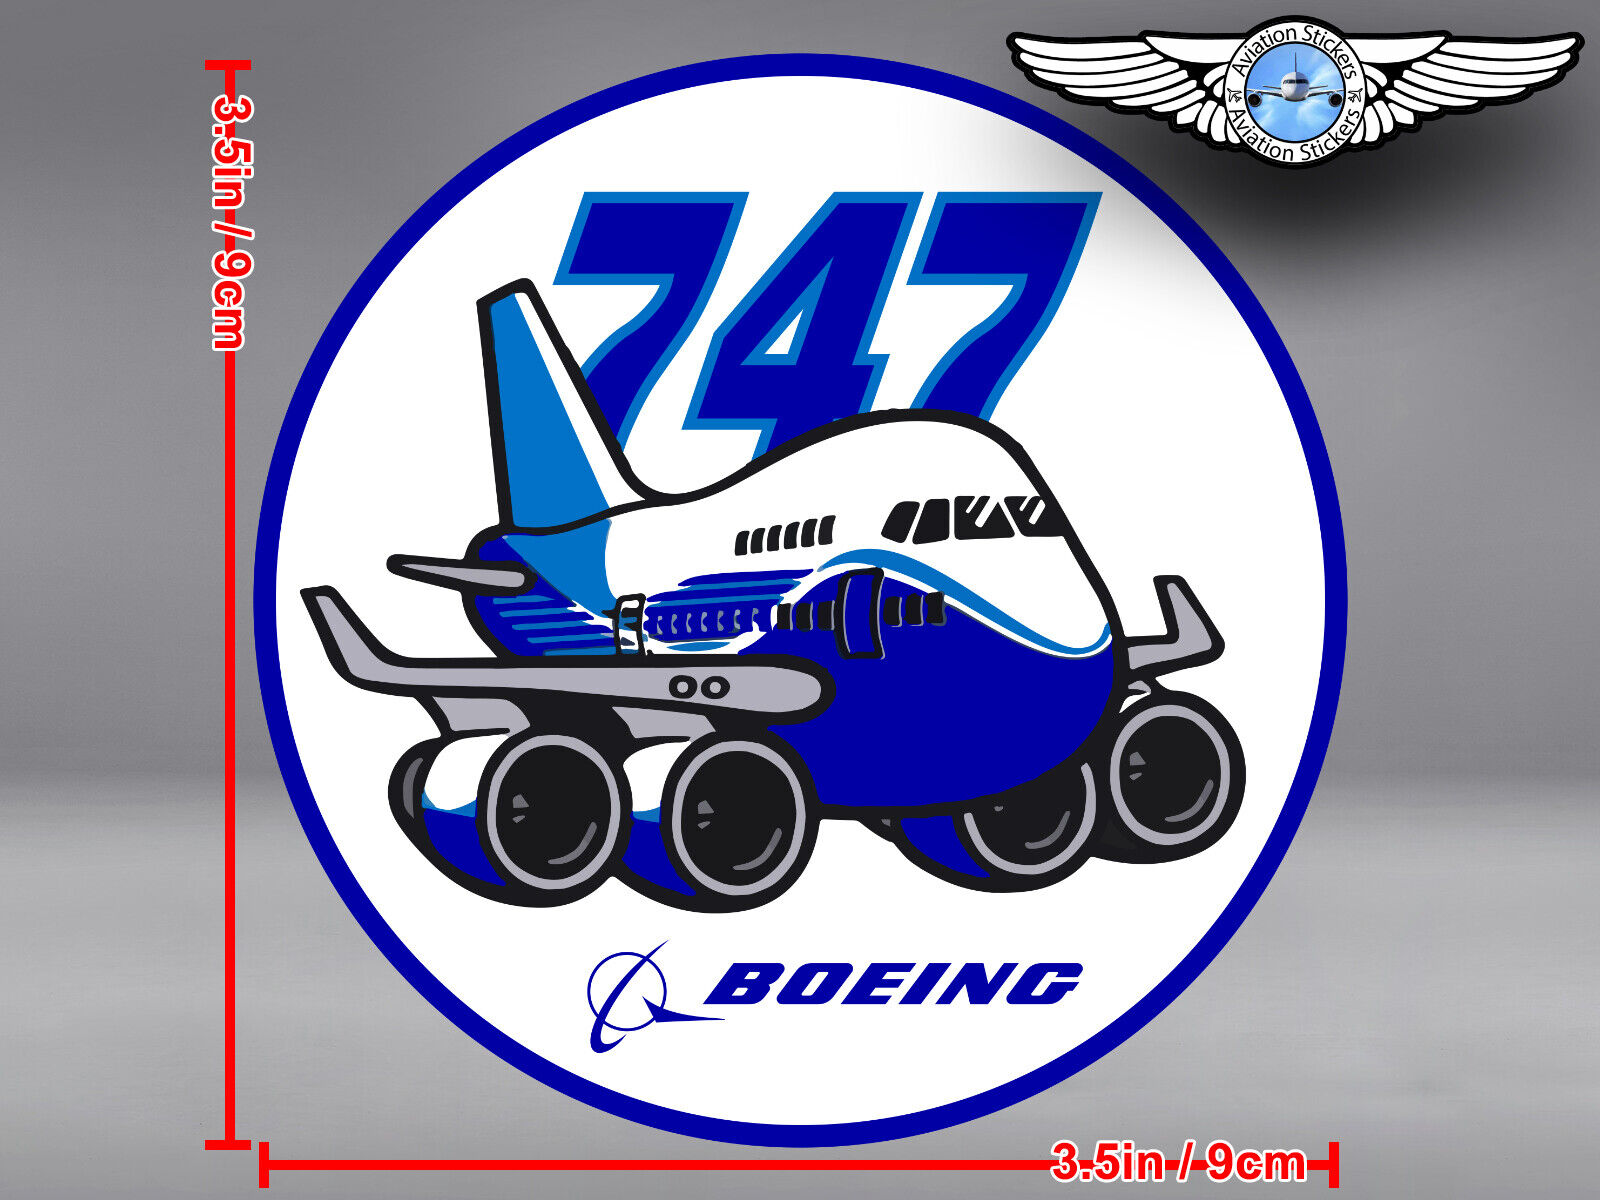 BOEING 747 B747 PUDGY STYLE ROUND DECAL / STICKER